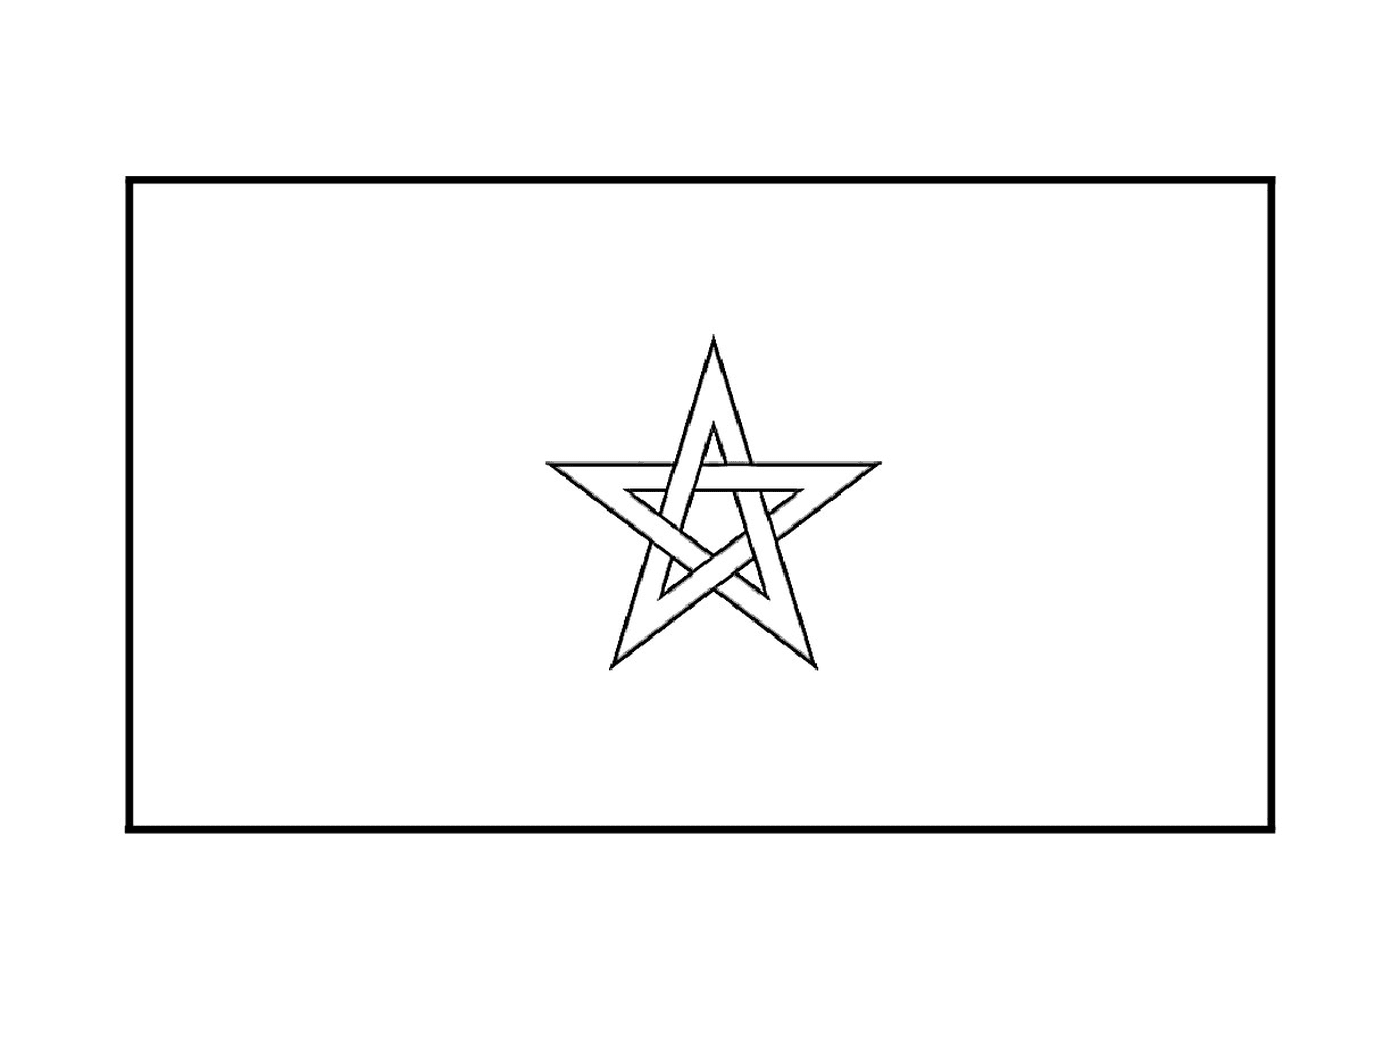  मोरोक्को का झंडा 